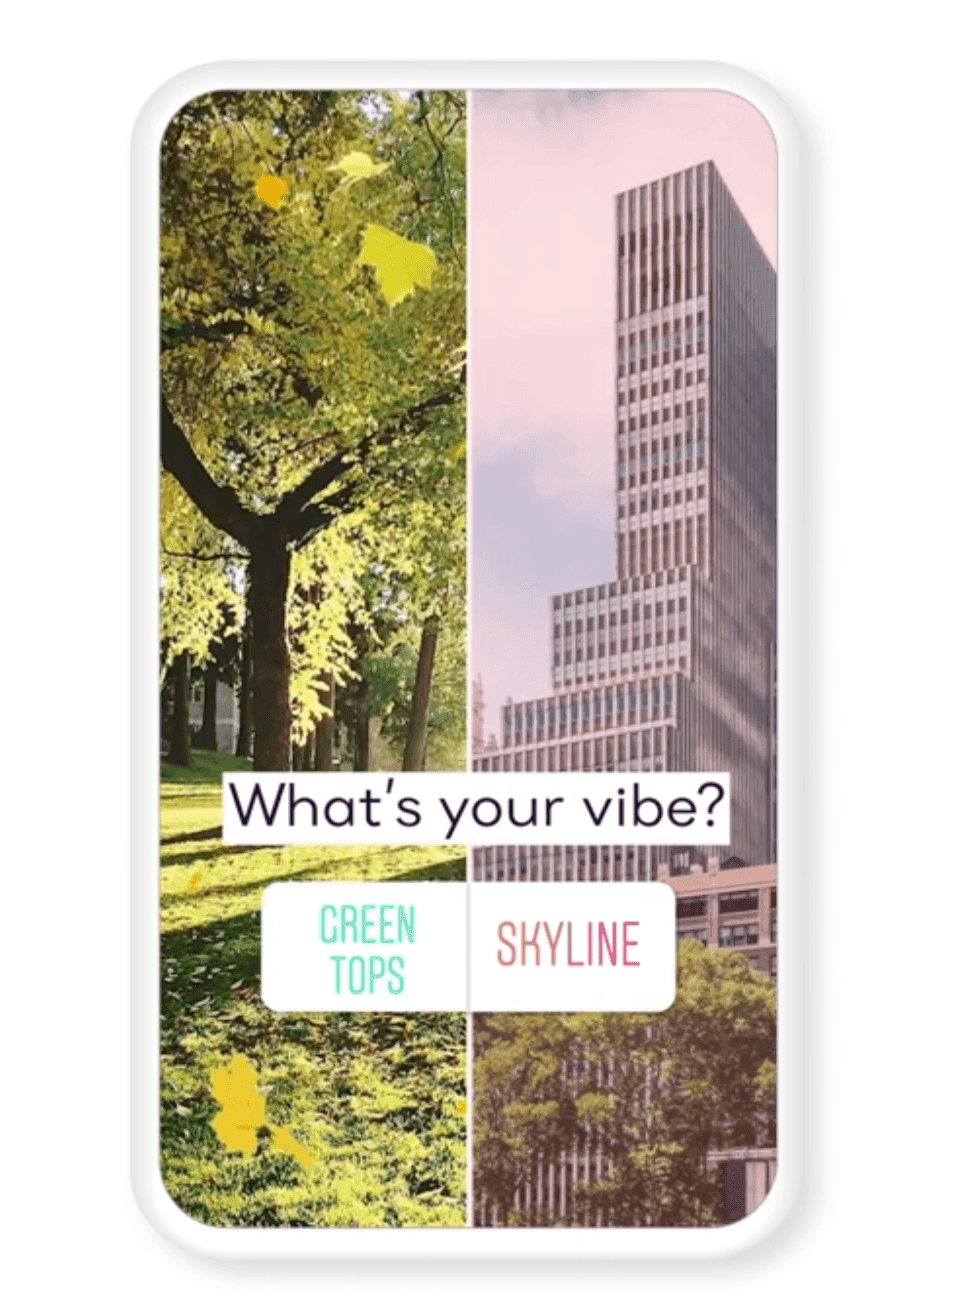 Instagram poll asking green tops or skyline